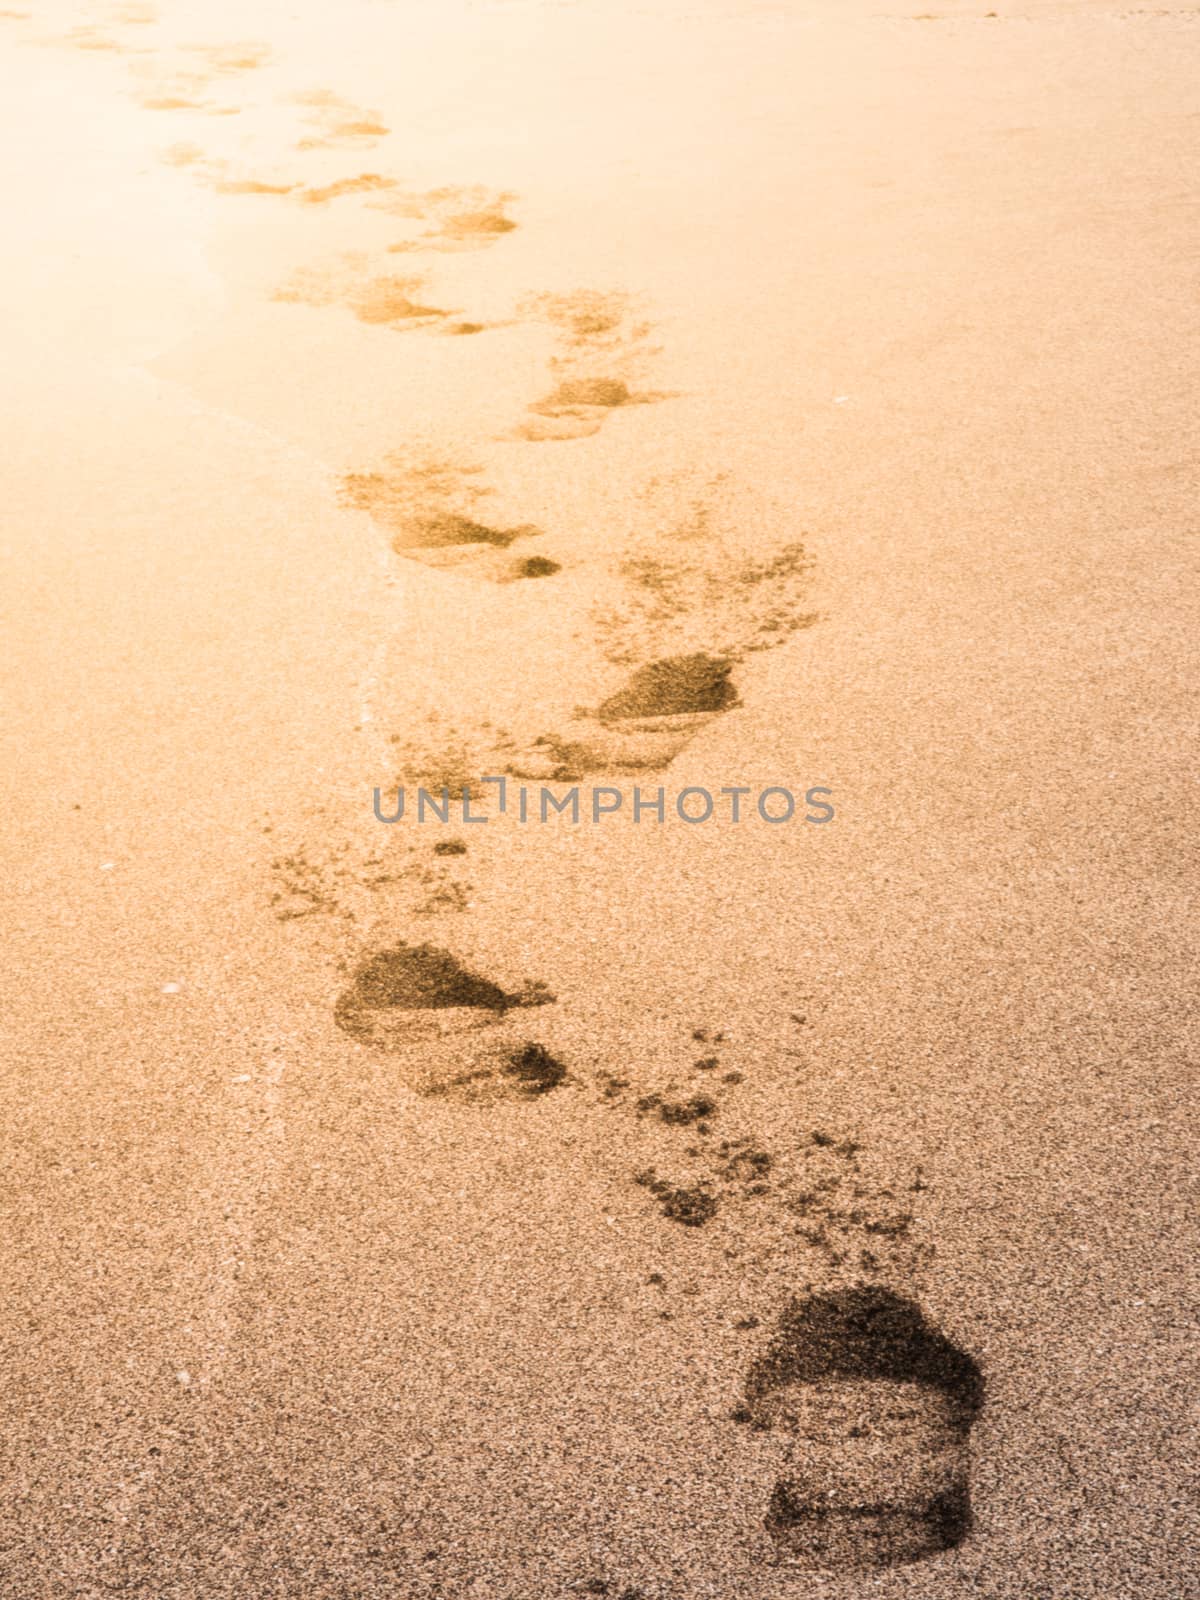 Human shoe prints in a sandy beach.